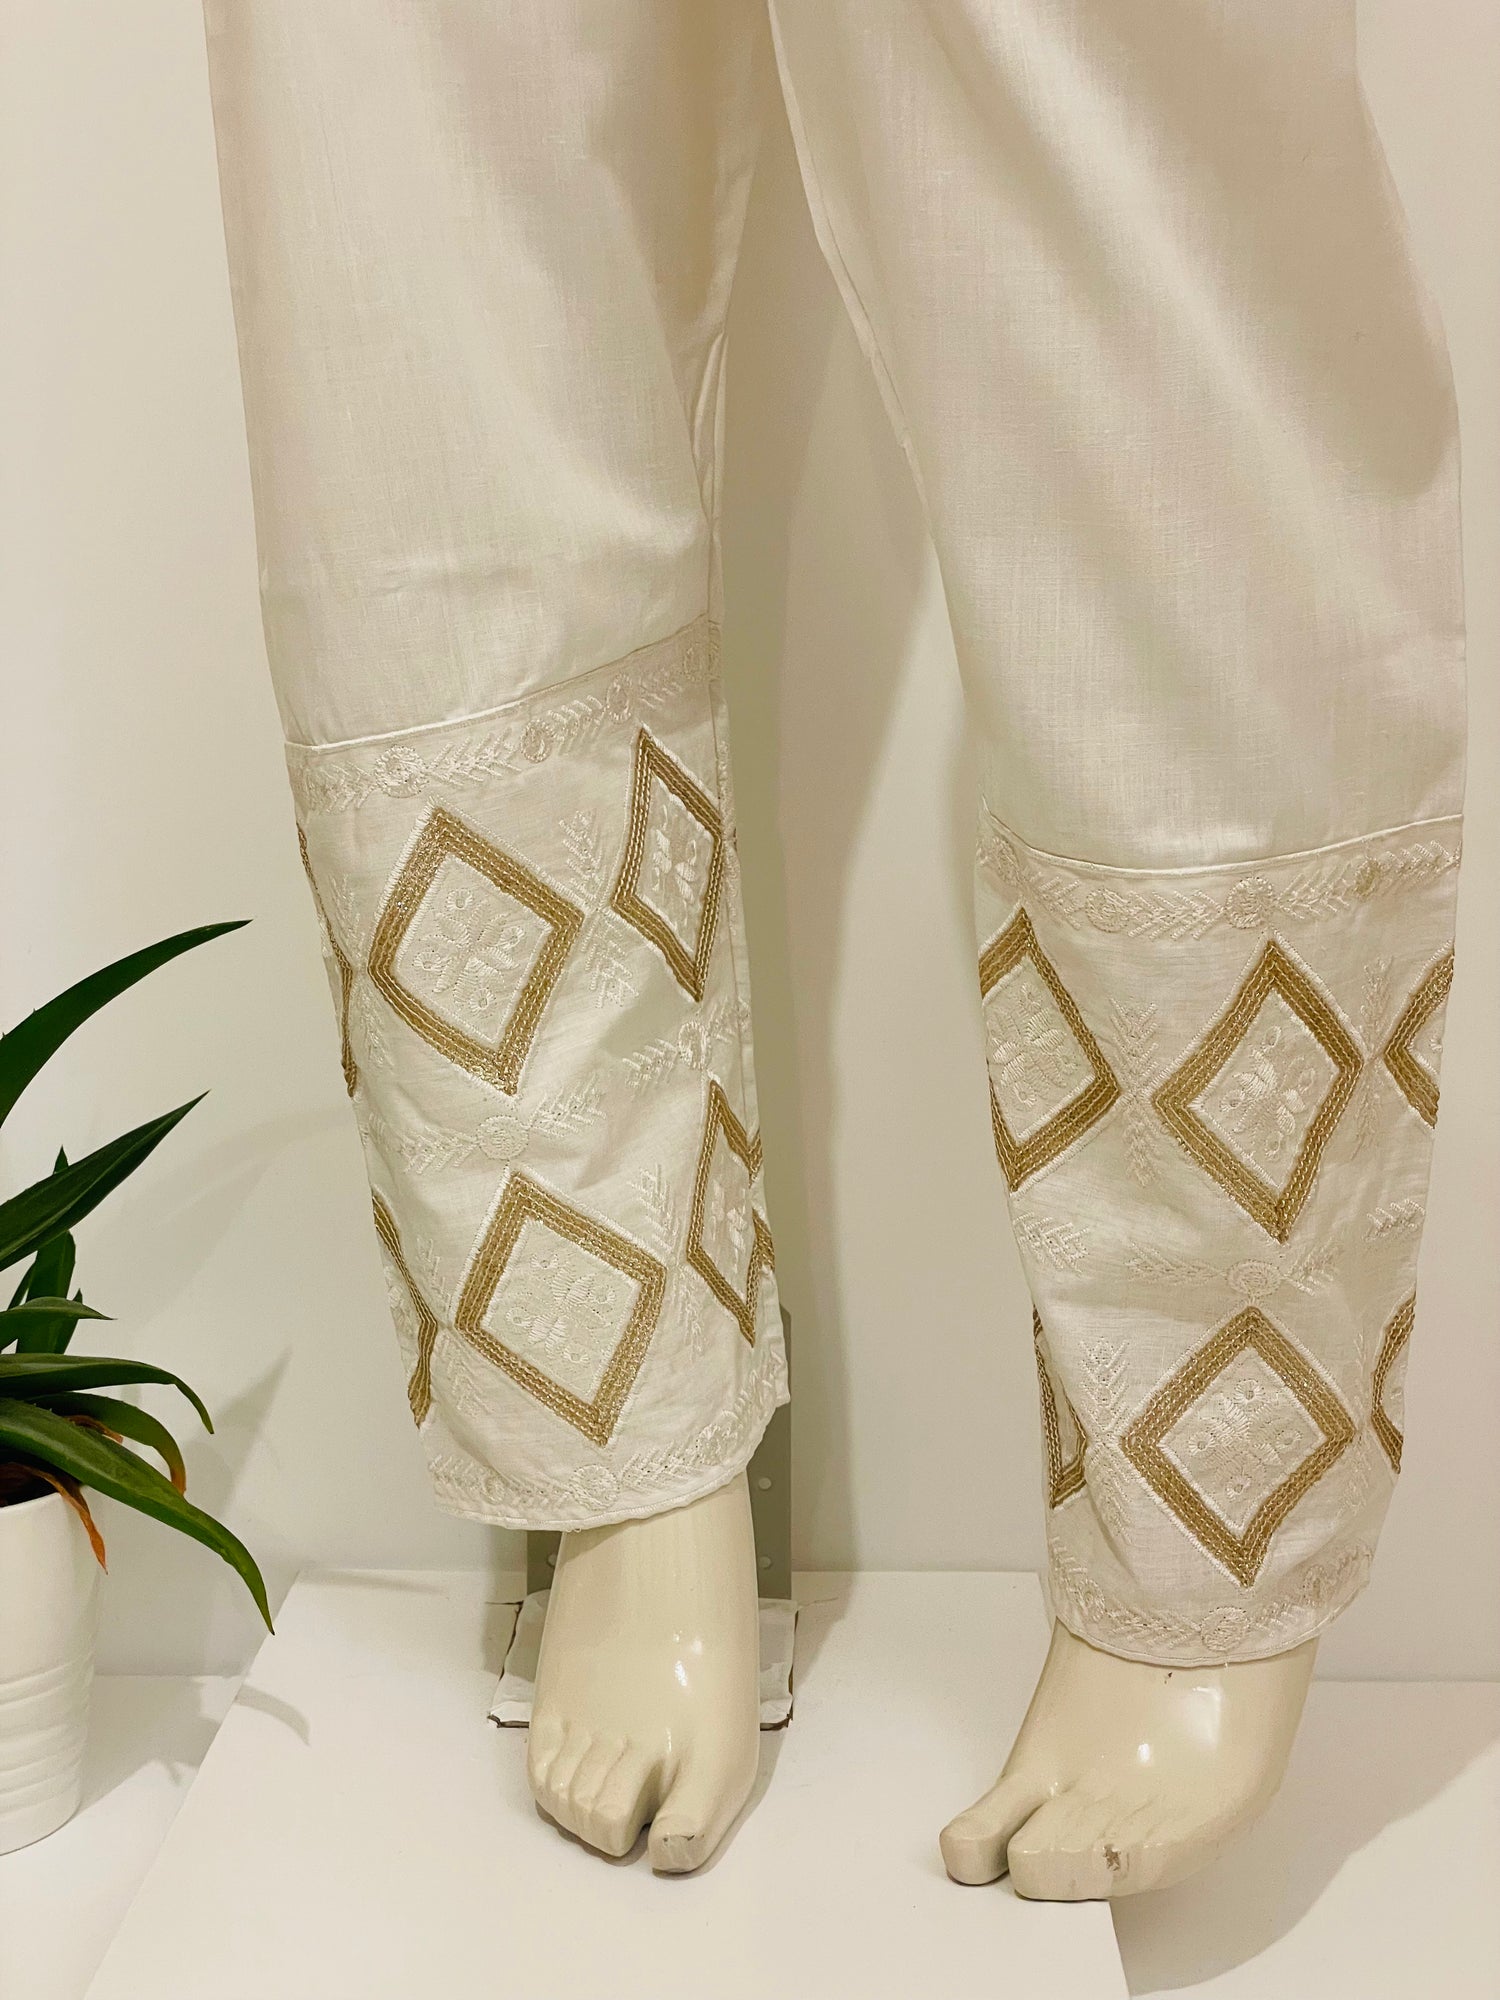 NEW ELASTICATED CIGARETTE pants trouser Indian Pakistani Style Silk Pants  Casual $16.99 - PicClick